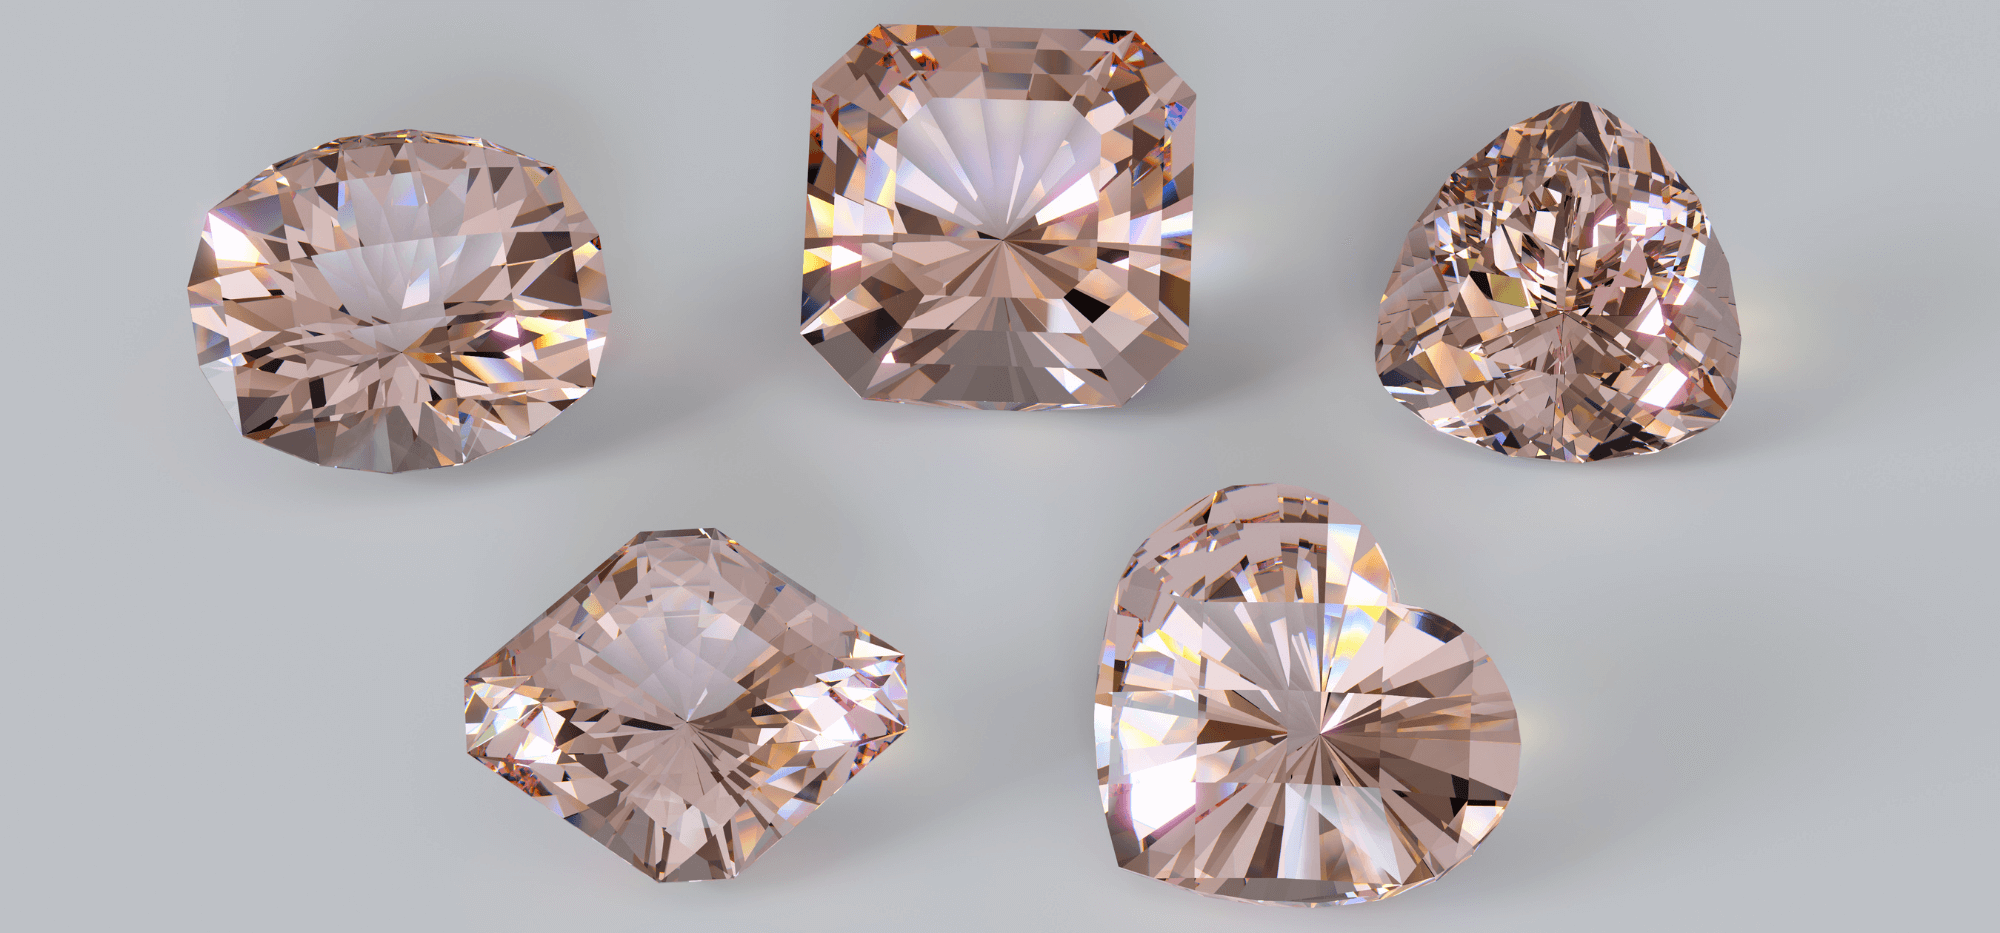 Different shapes of morganite gemstones